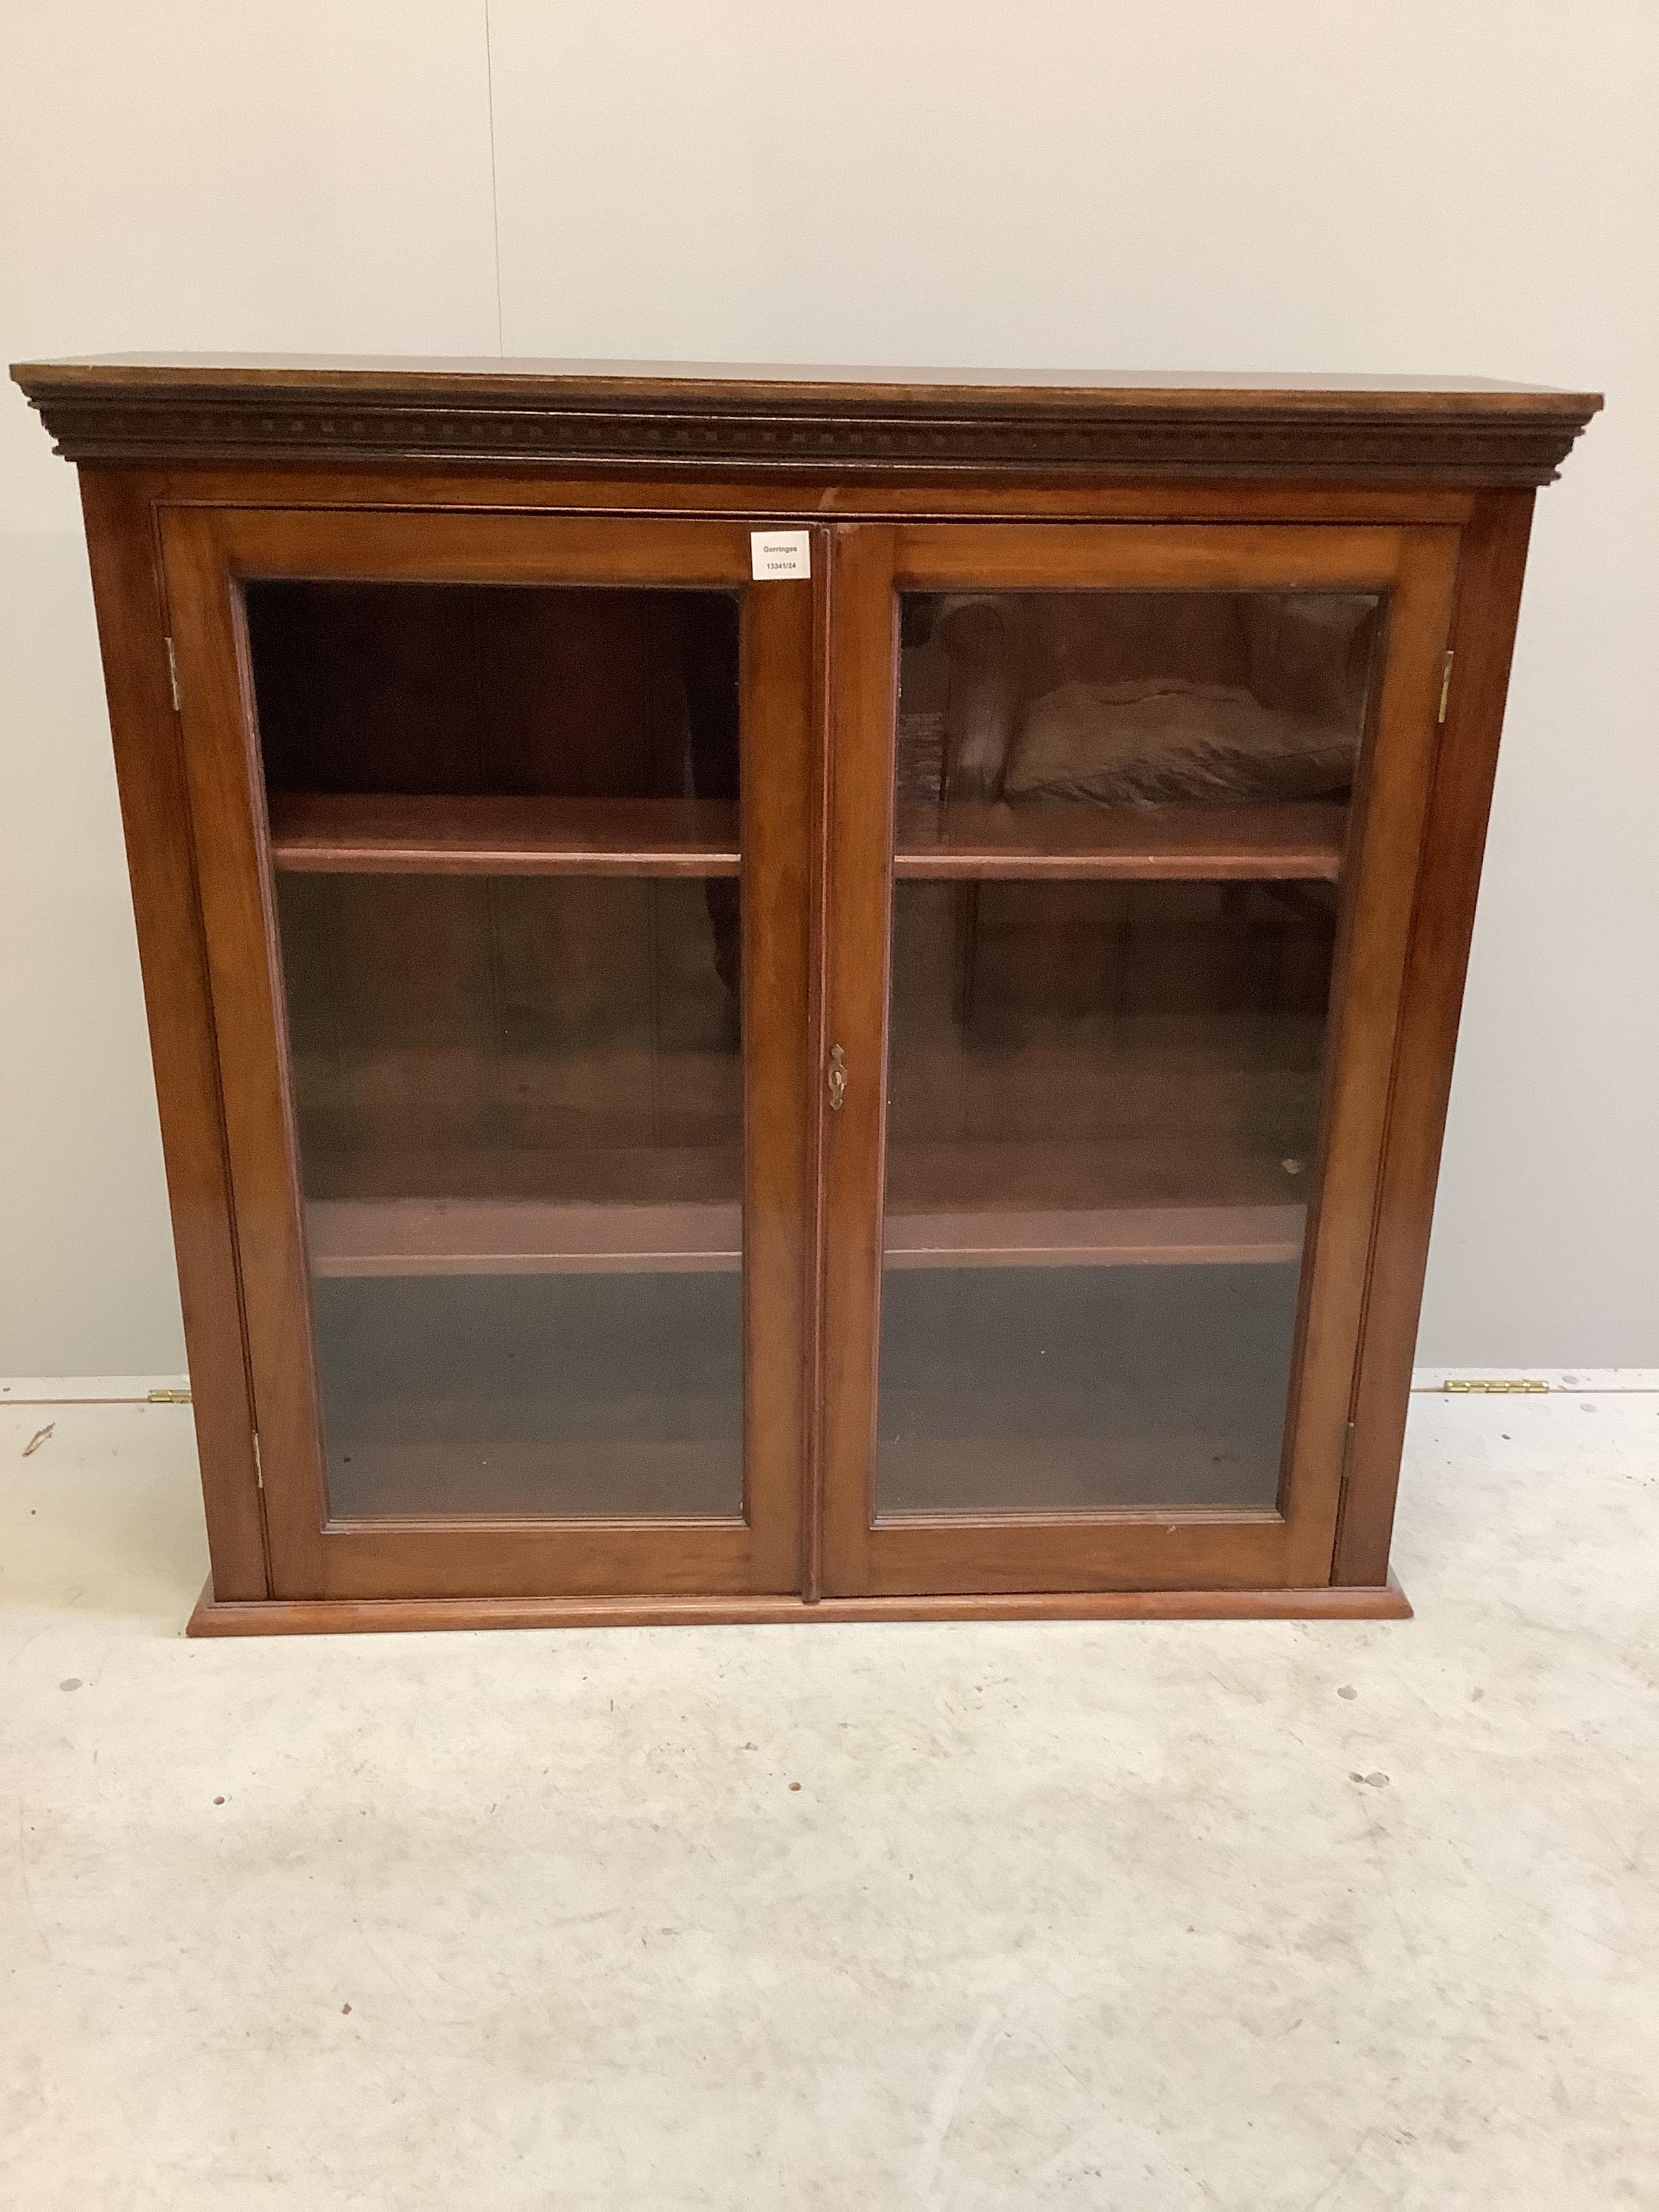 An early 20th century glazed mahogany bookcase, width 107cm, depth 28cm, height 102cm